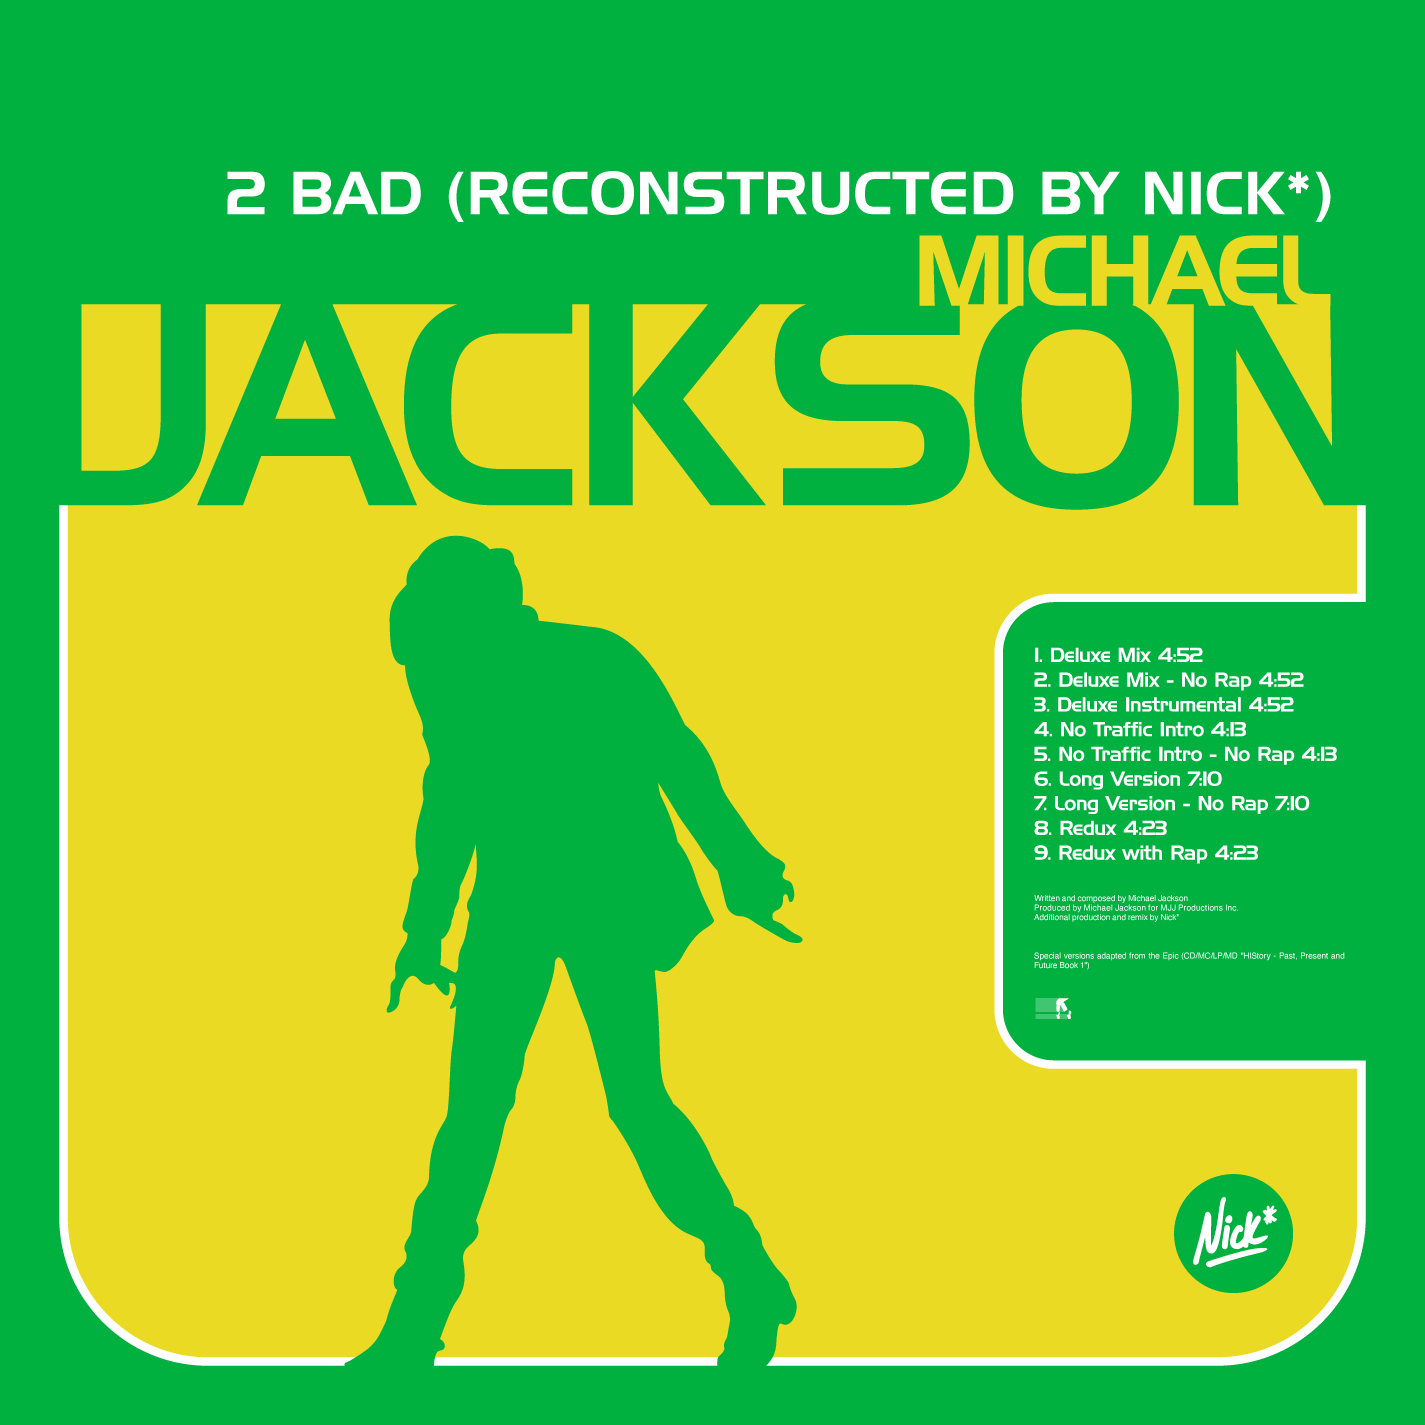 Michael Jackson - 2 Bad Nick* Redux